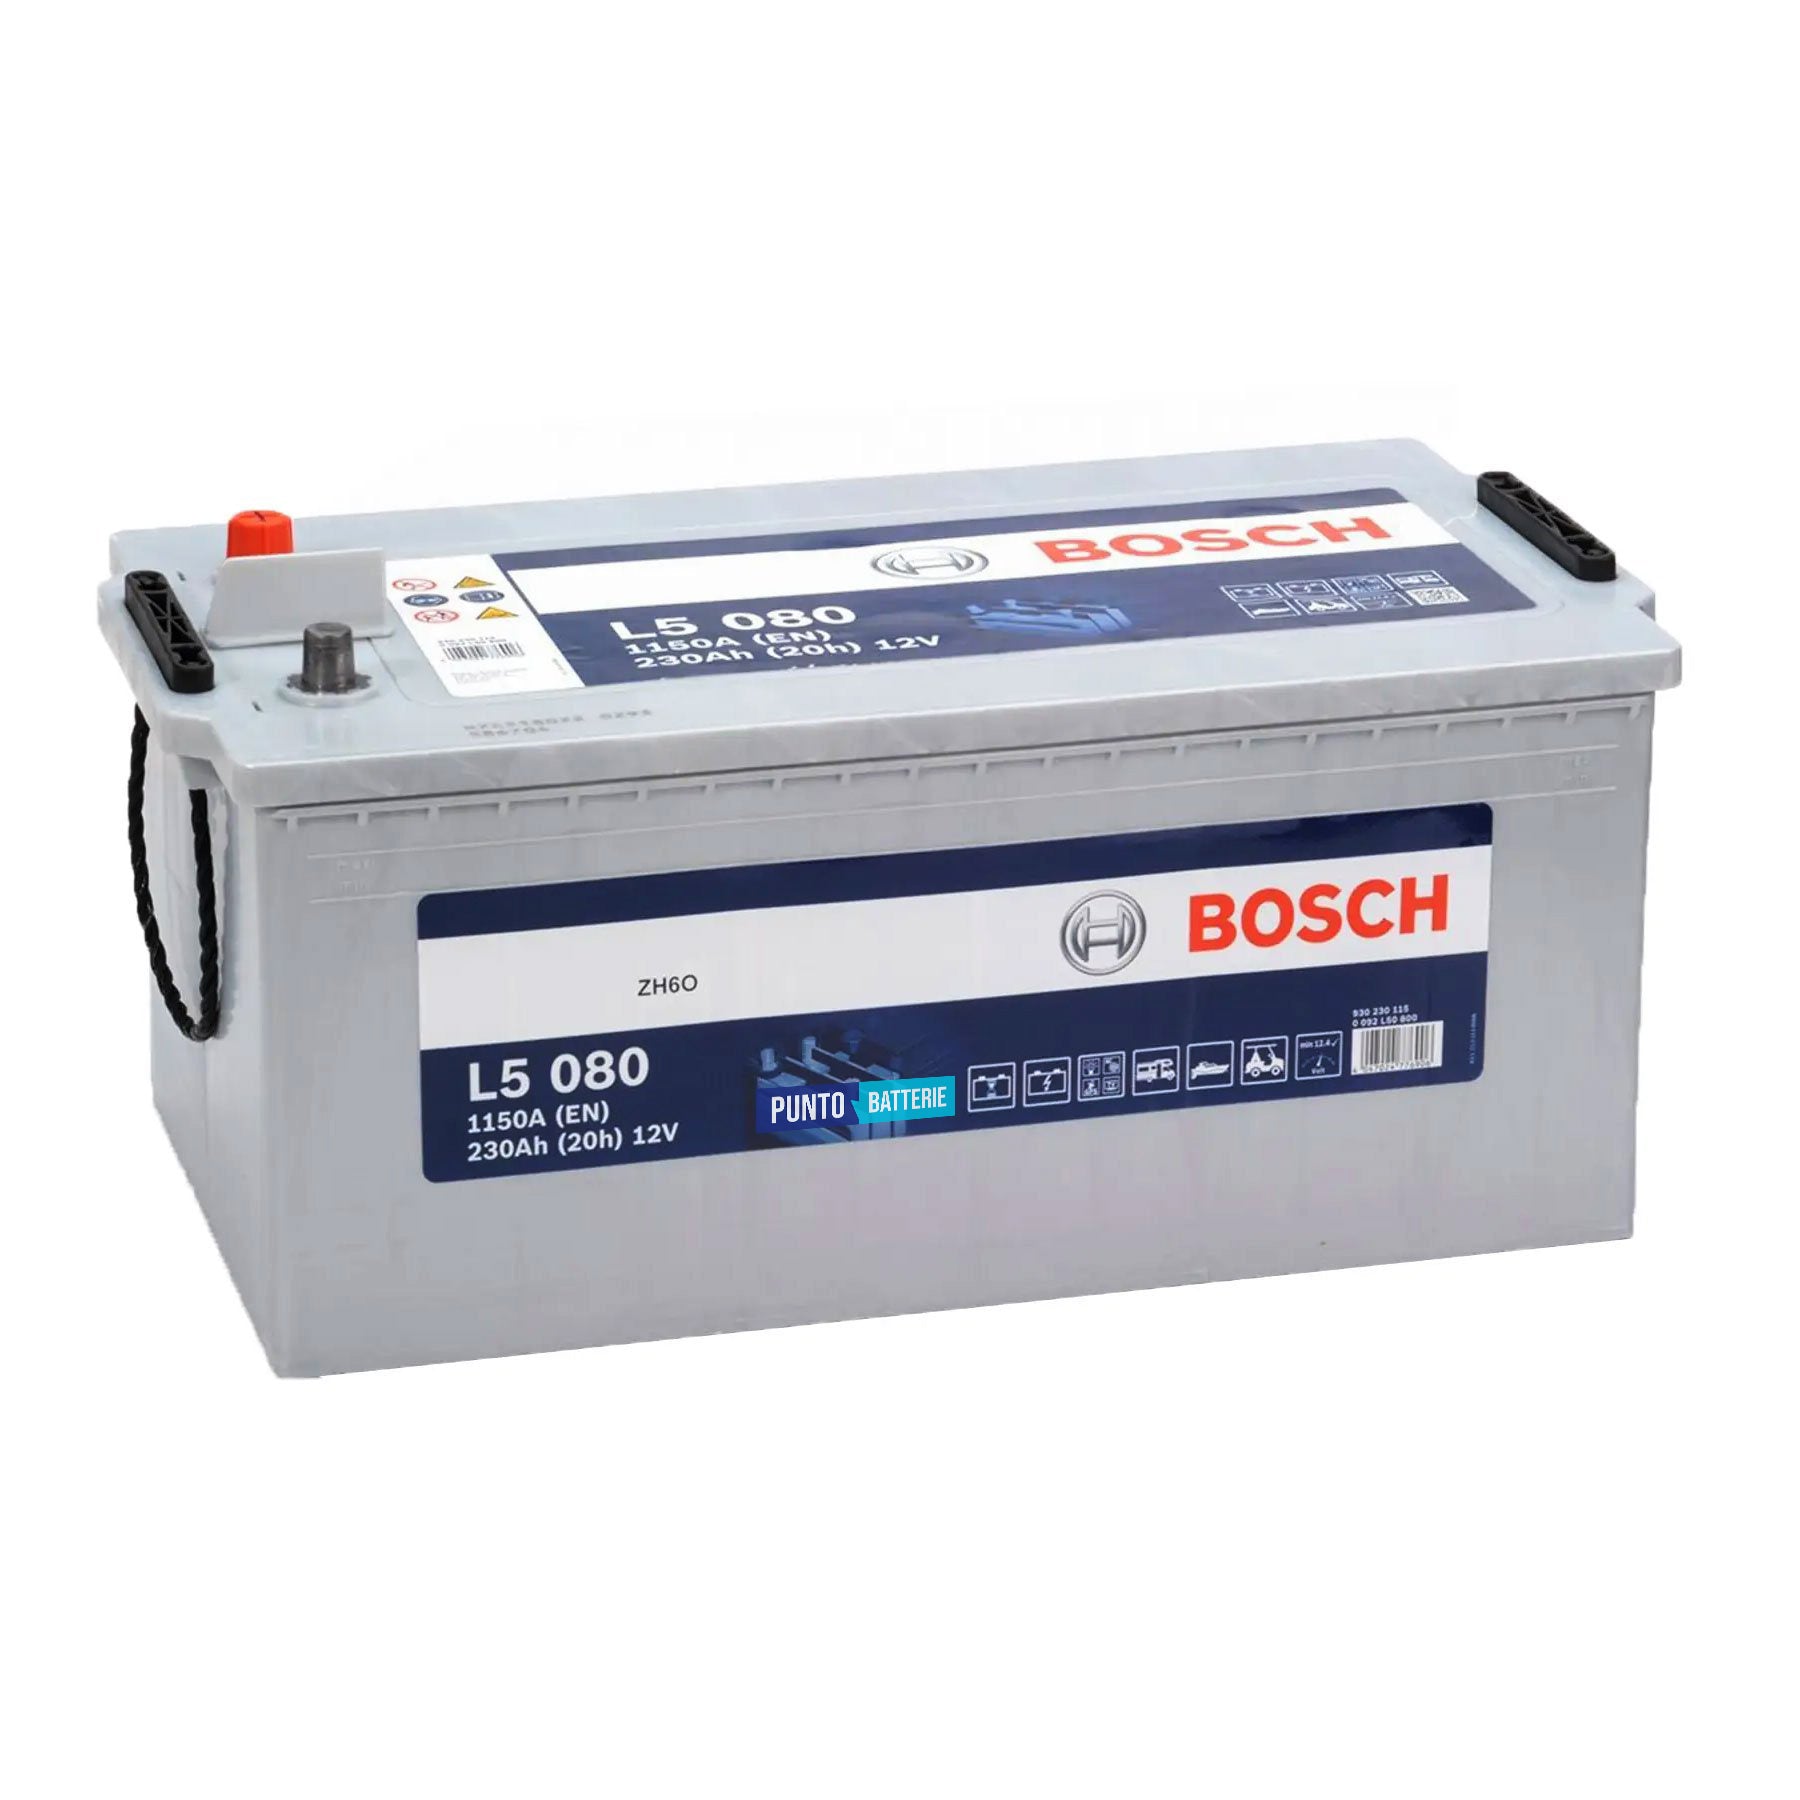 Batteria originale Bosch L5 L5 080, dimensioni 518 x 276 x 242, 12 volt, 230 amperora. Batteria per servizi di camper, barca e applicazioni a scarica lenta.